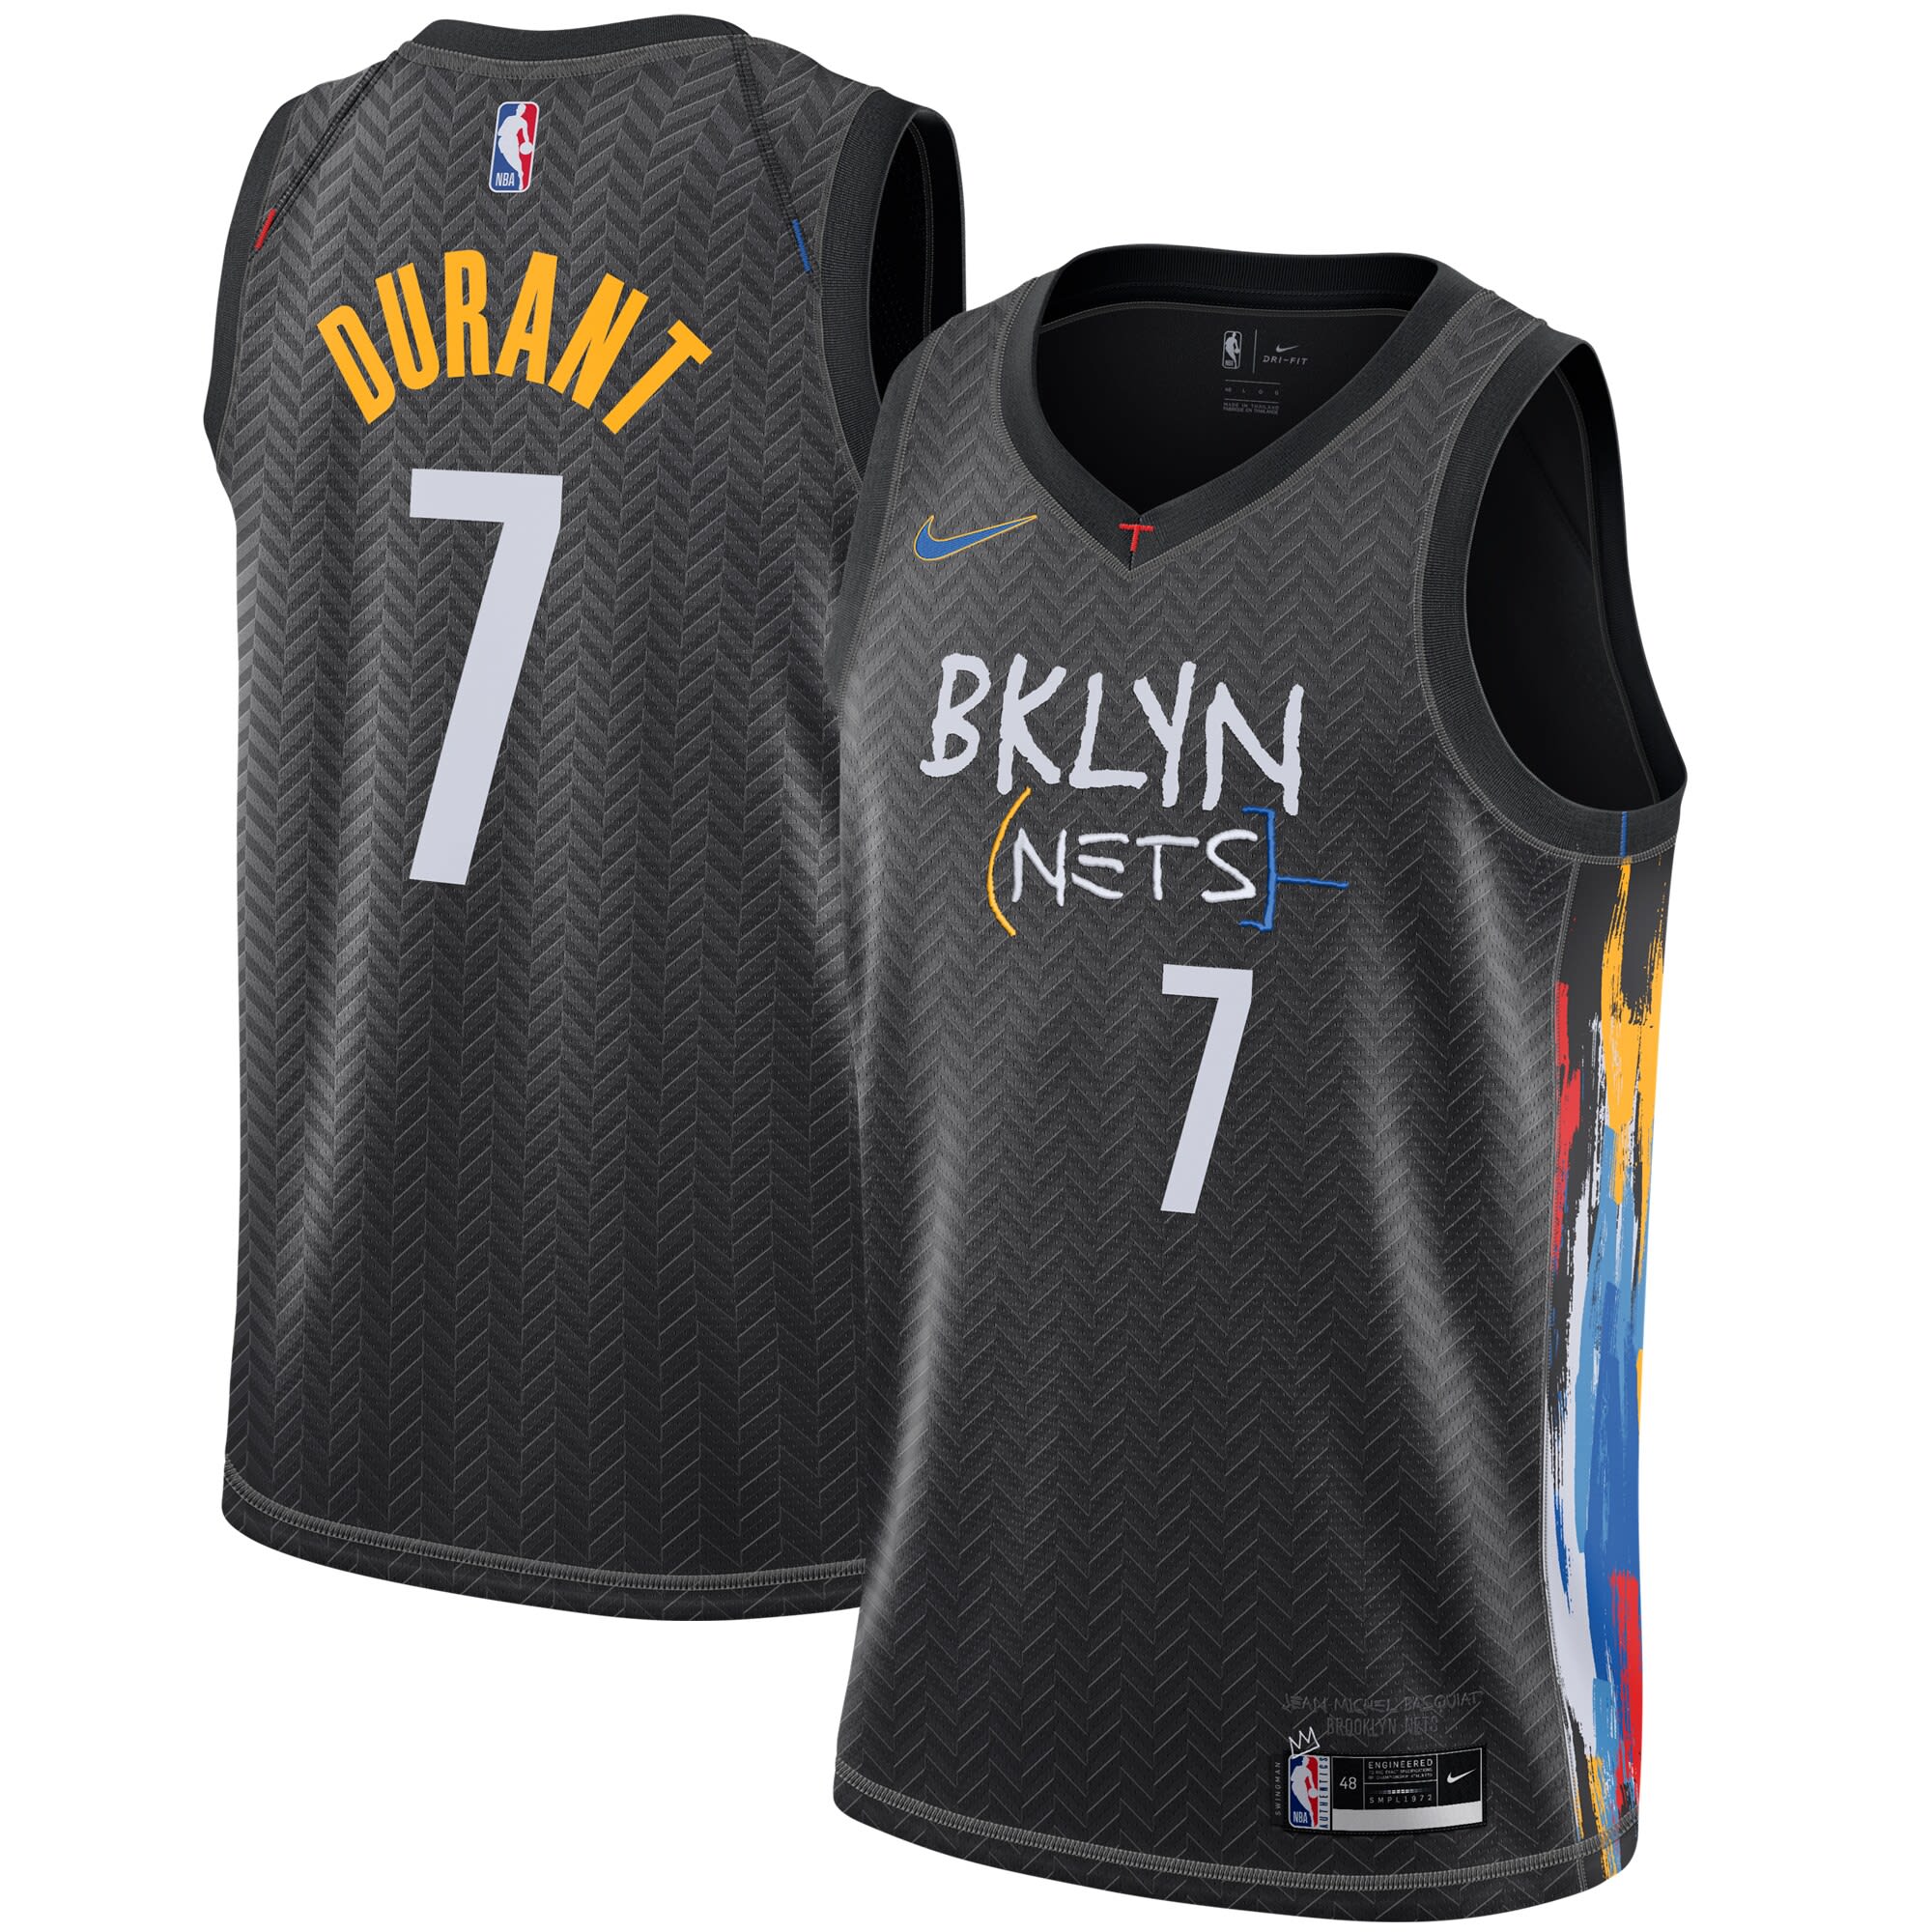 Brooklyn Nets 2021 Jersey Tagum City RB Tshirt, Tarpaulin Printing